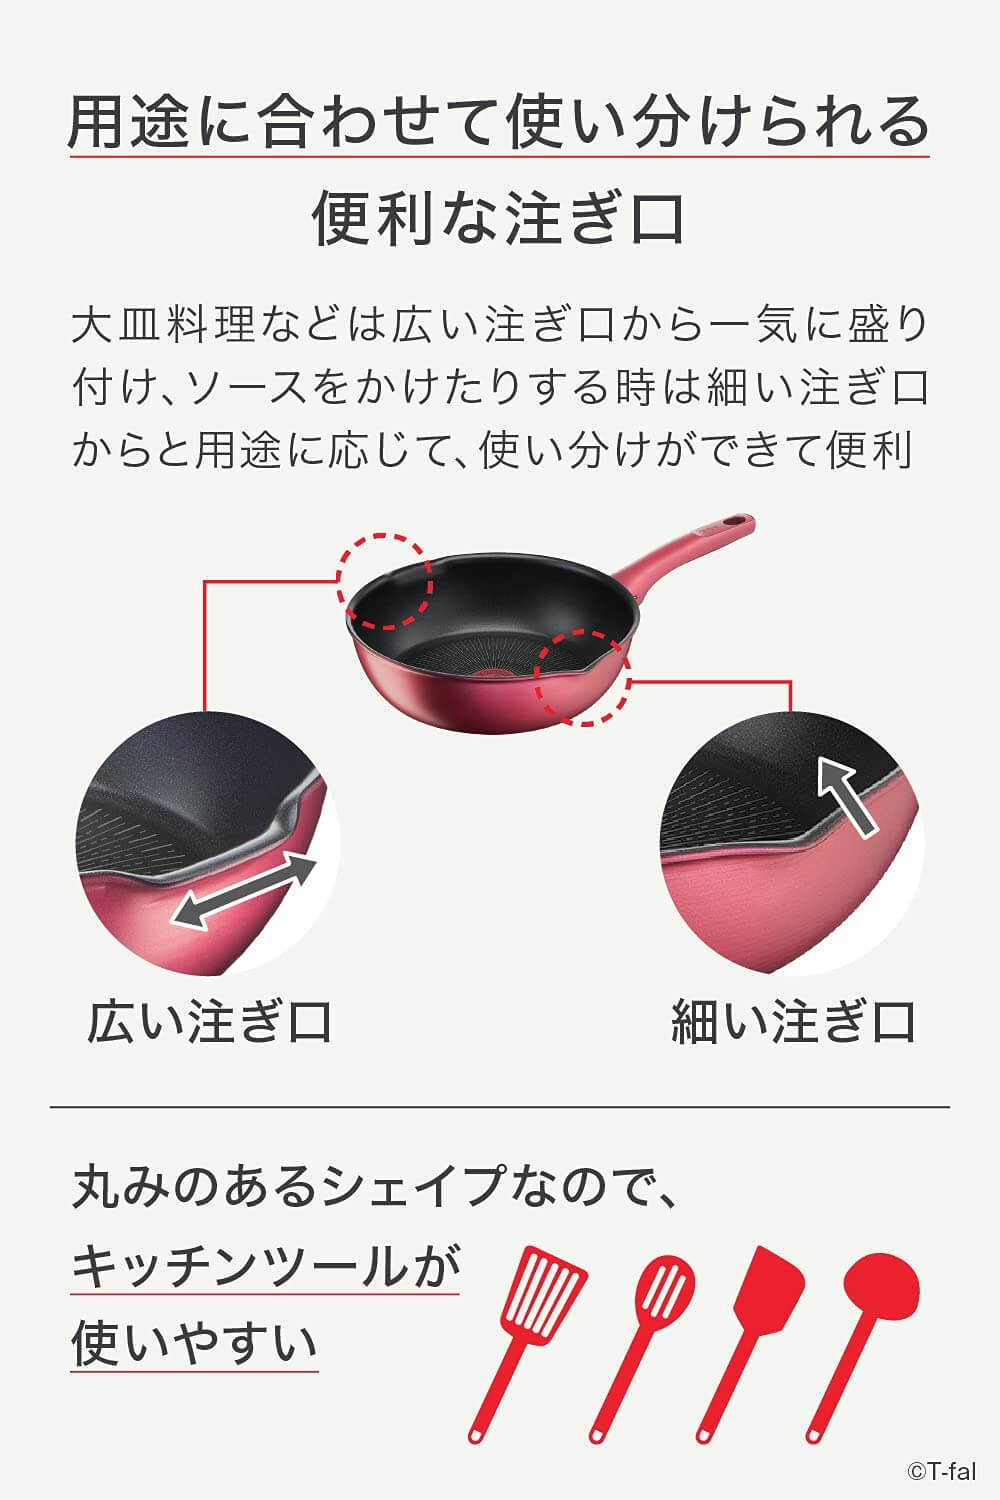 UNLIMITED 6X Rouge Multi-Pan G2627 - imy Shop Japan